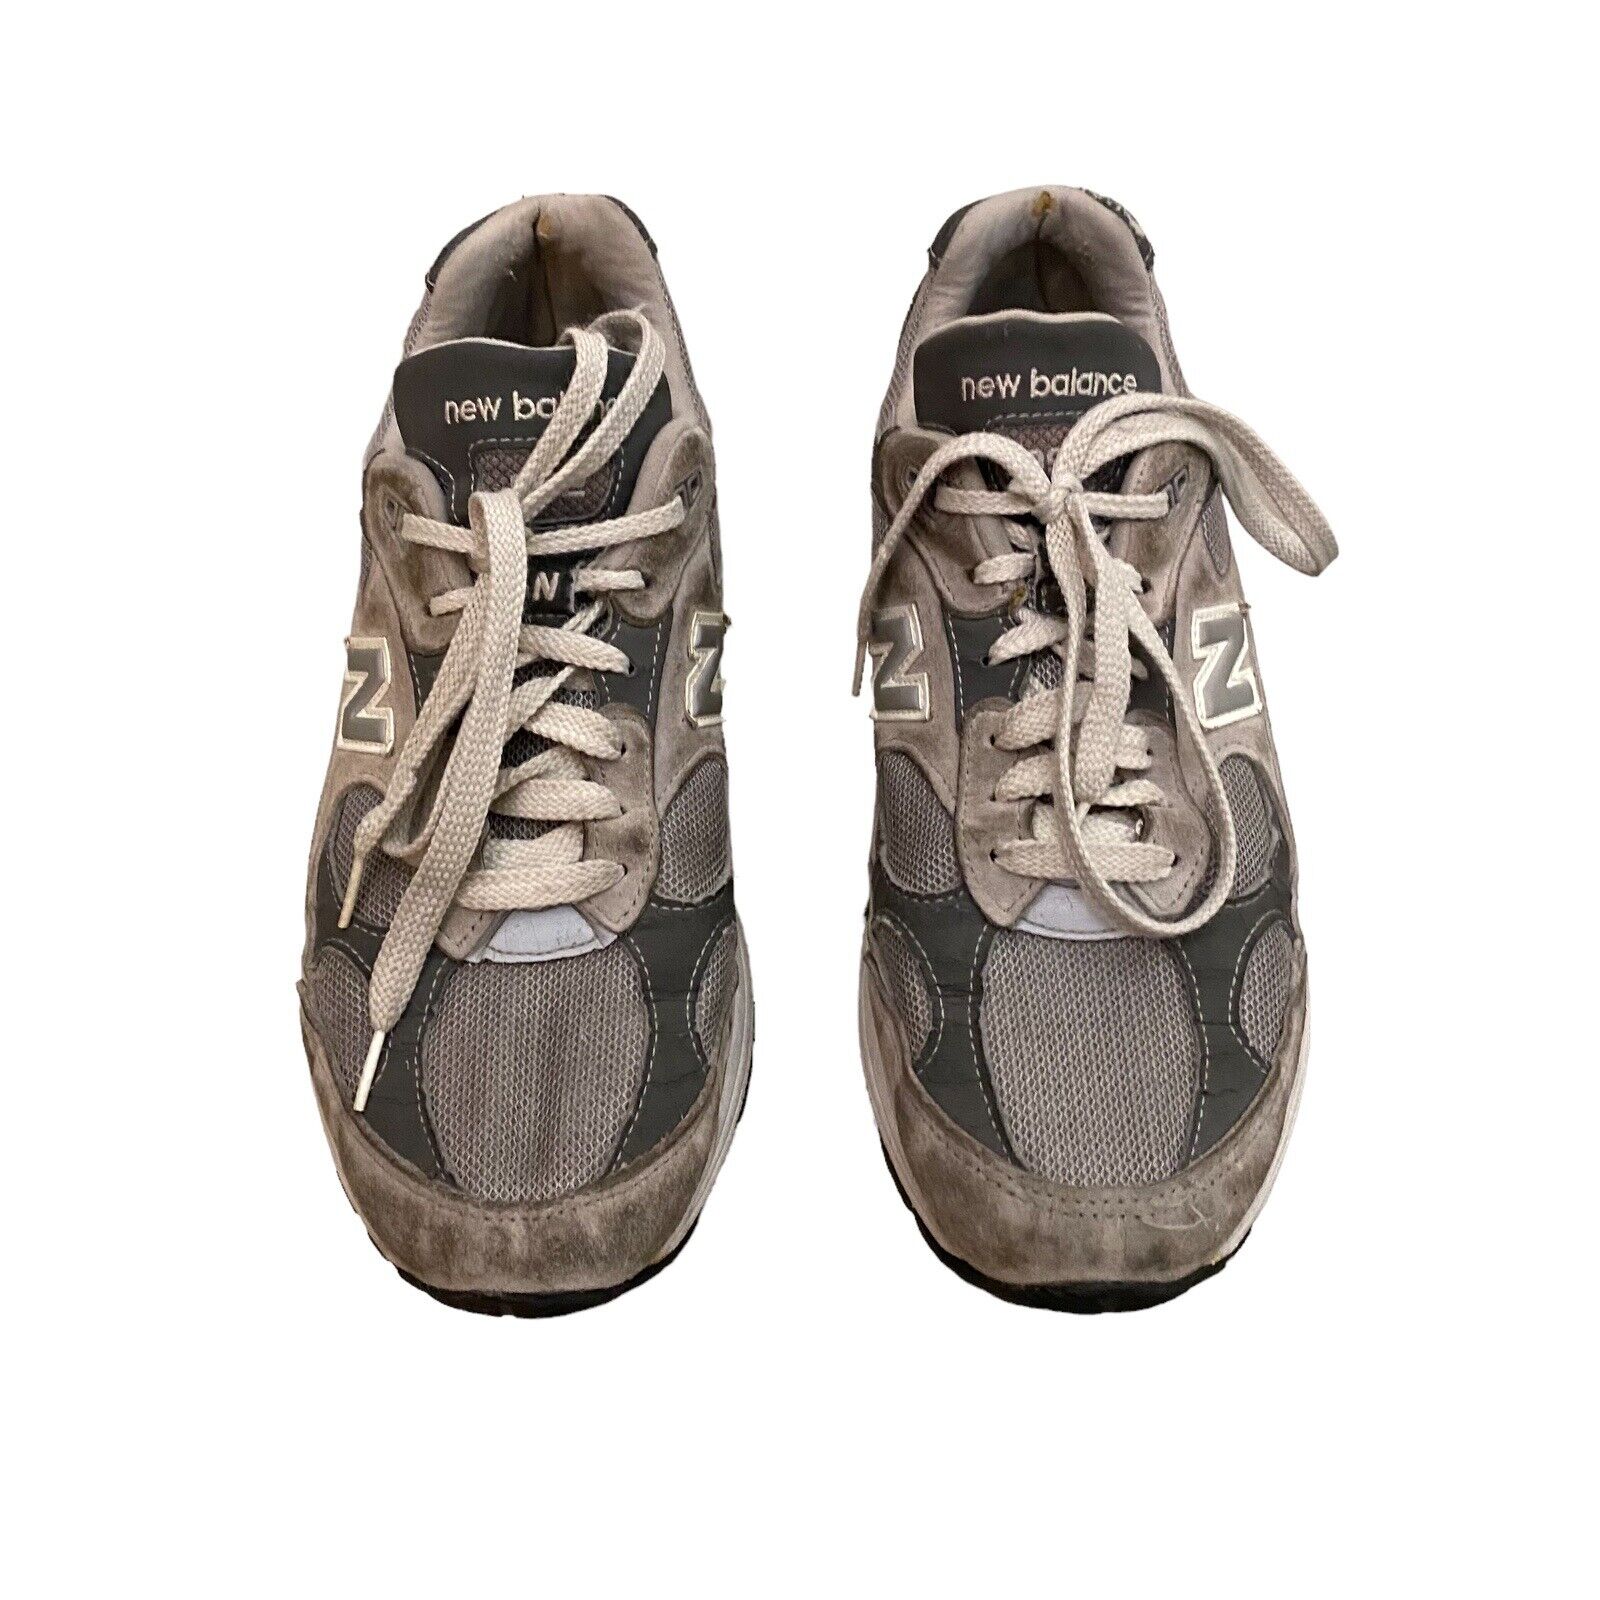 New Balance 992 Suede Men Running Walking Shoes Sneakers Gray M992GL Sz 11 D